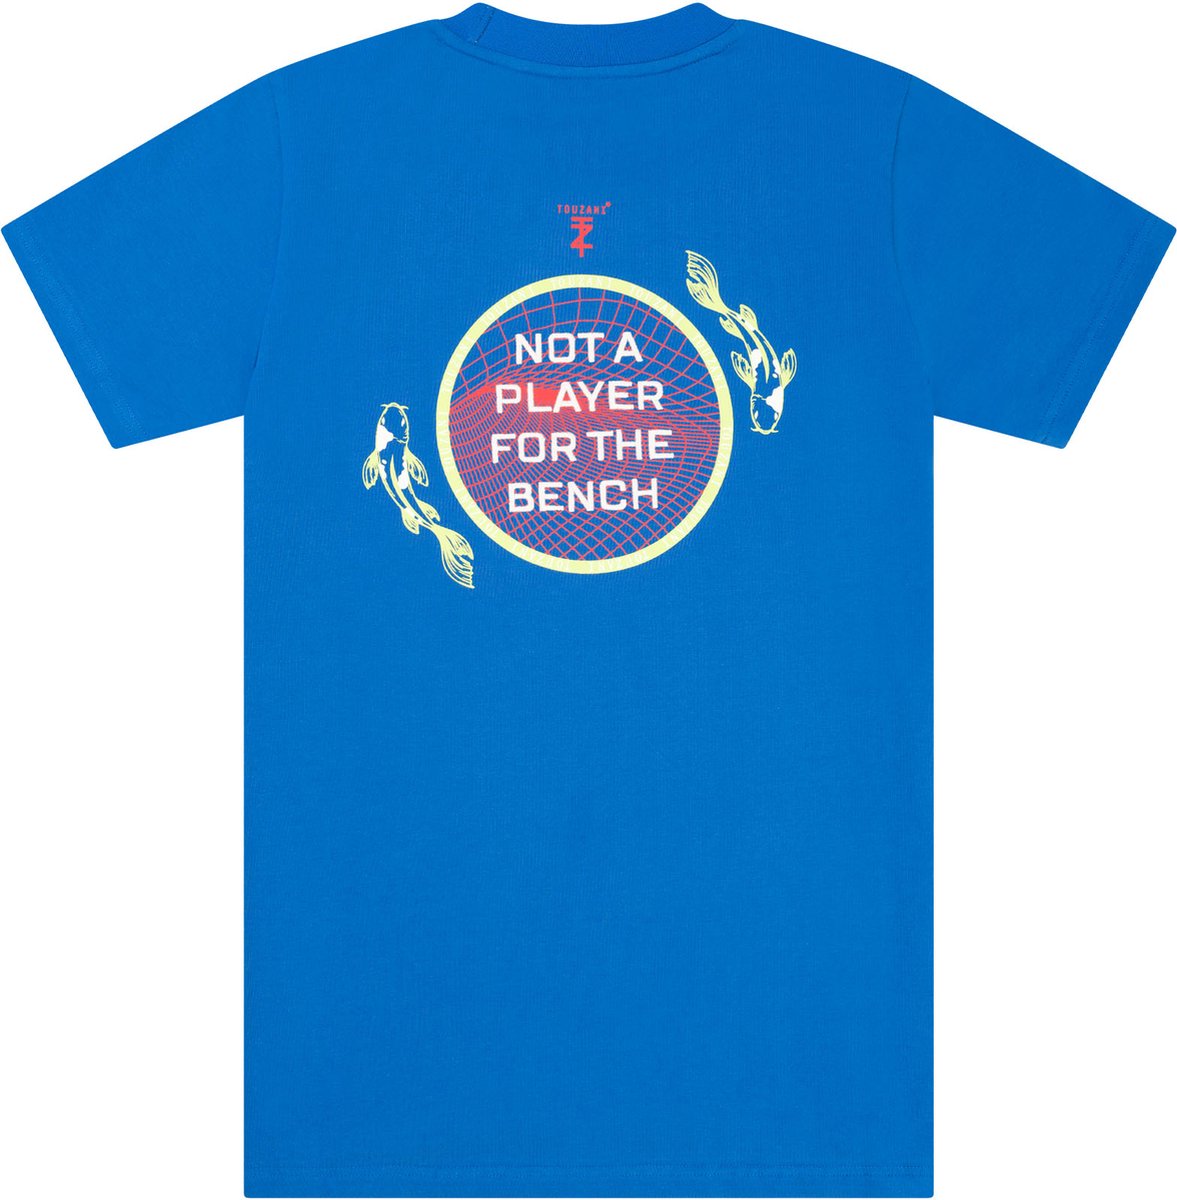 Touzani - T-shirt - GOROMO NAVY (134-140) - Kind - Voetbalshirt - Sportshirt